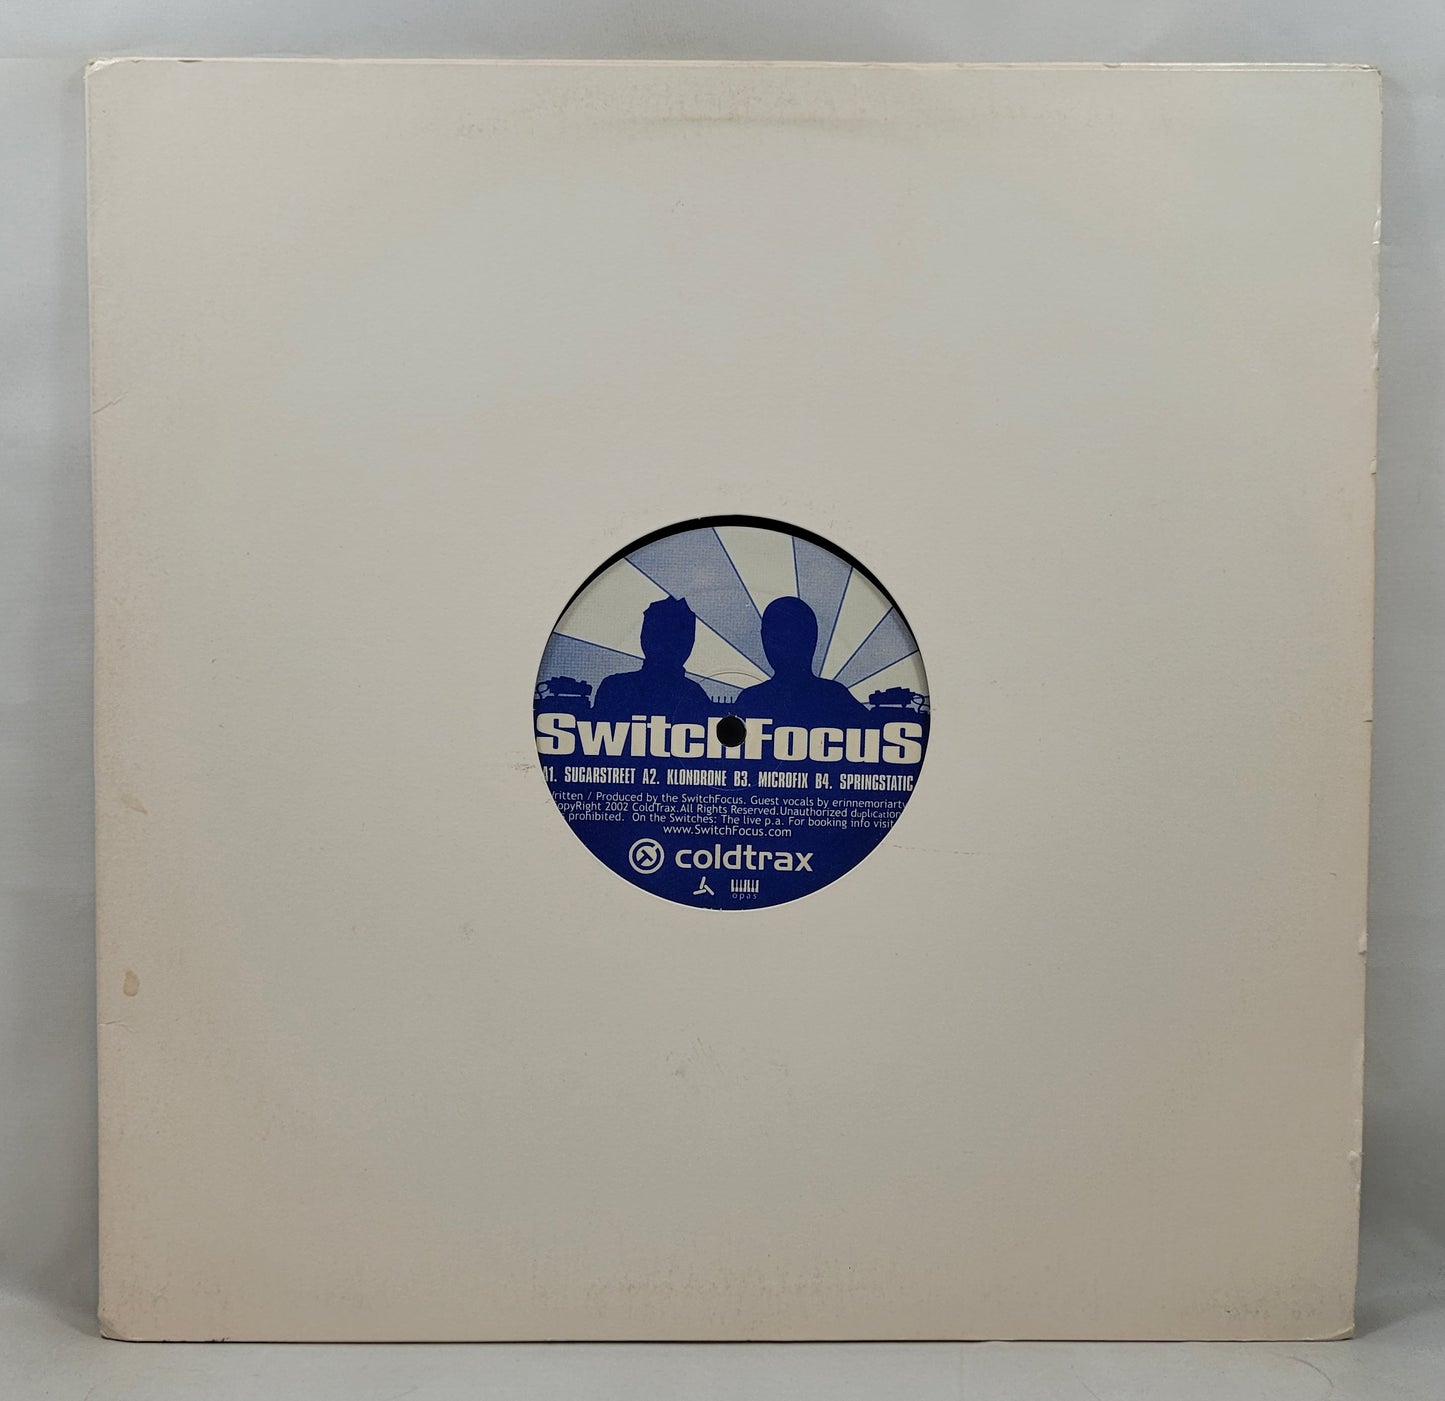 SwitchFocus - SwitchFocus [Vinyl Record 12" Single]